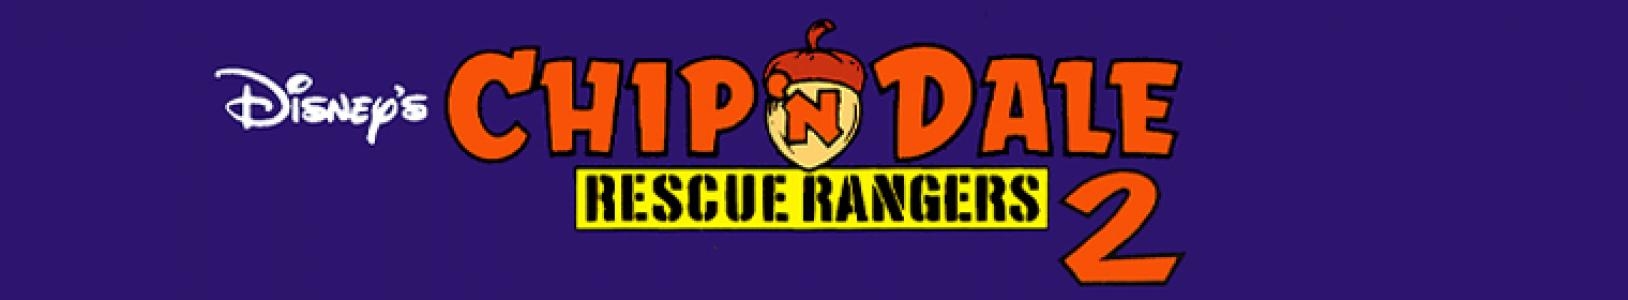 Disney's Chip 'N Dale: Rescue Rangers 2 banner